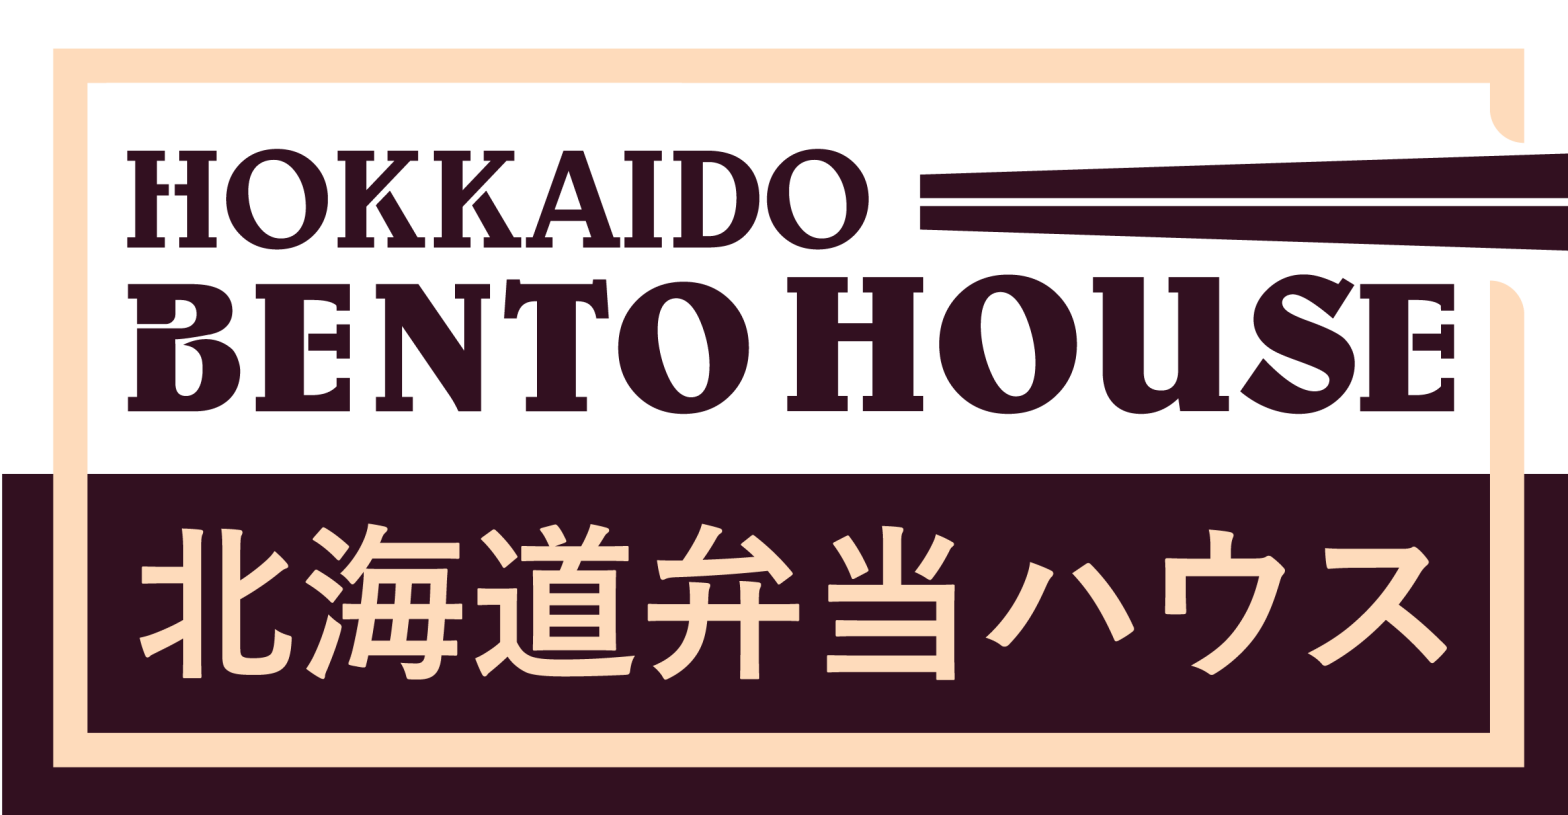 Hokkaido Bento House